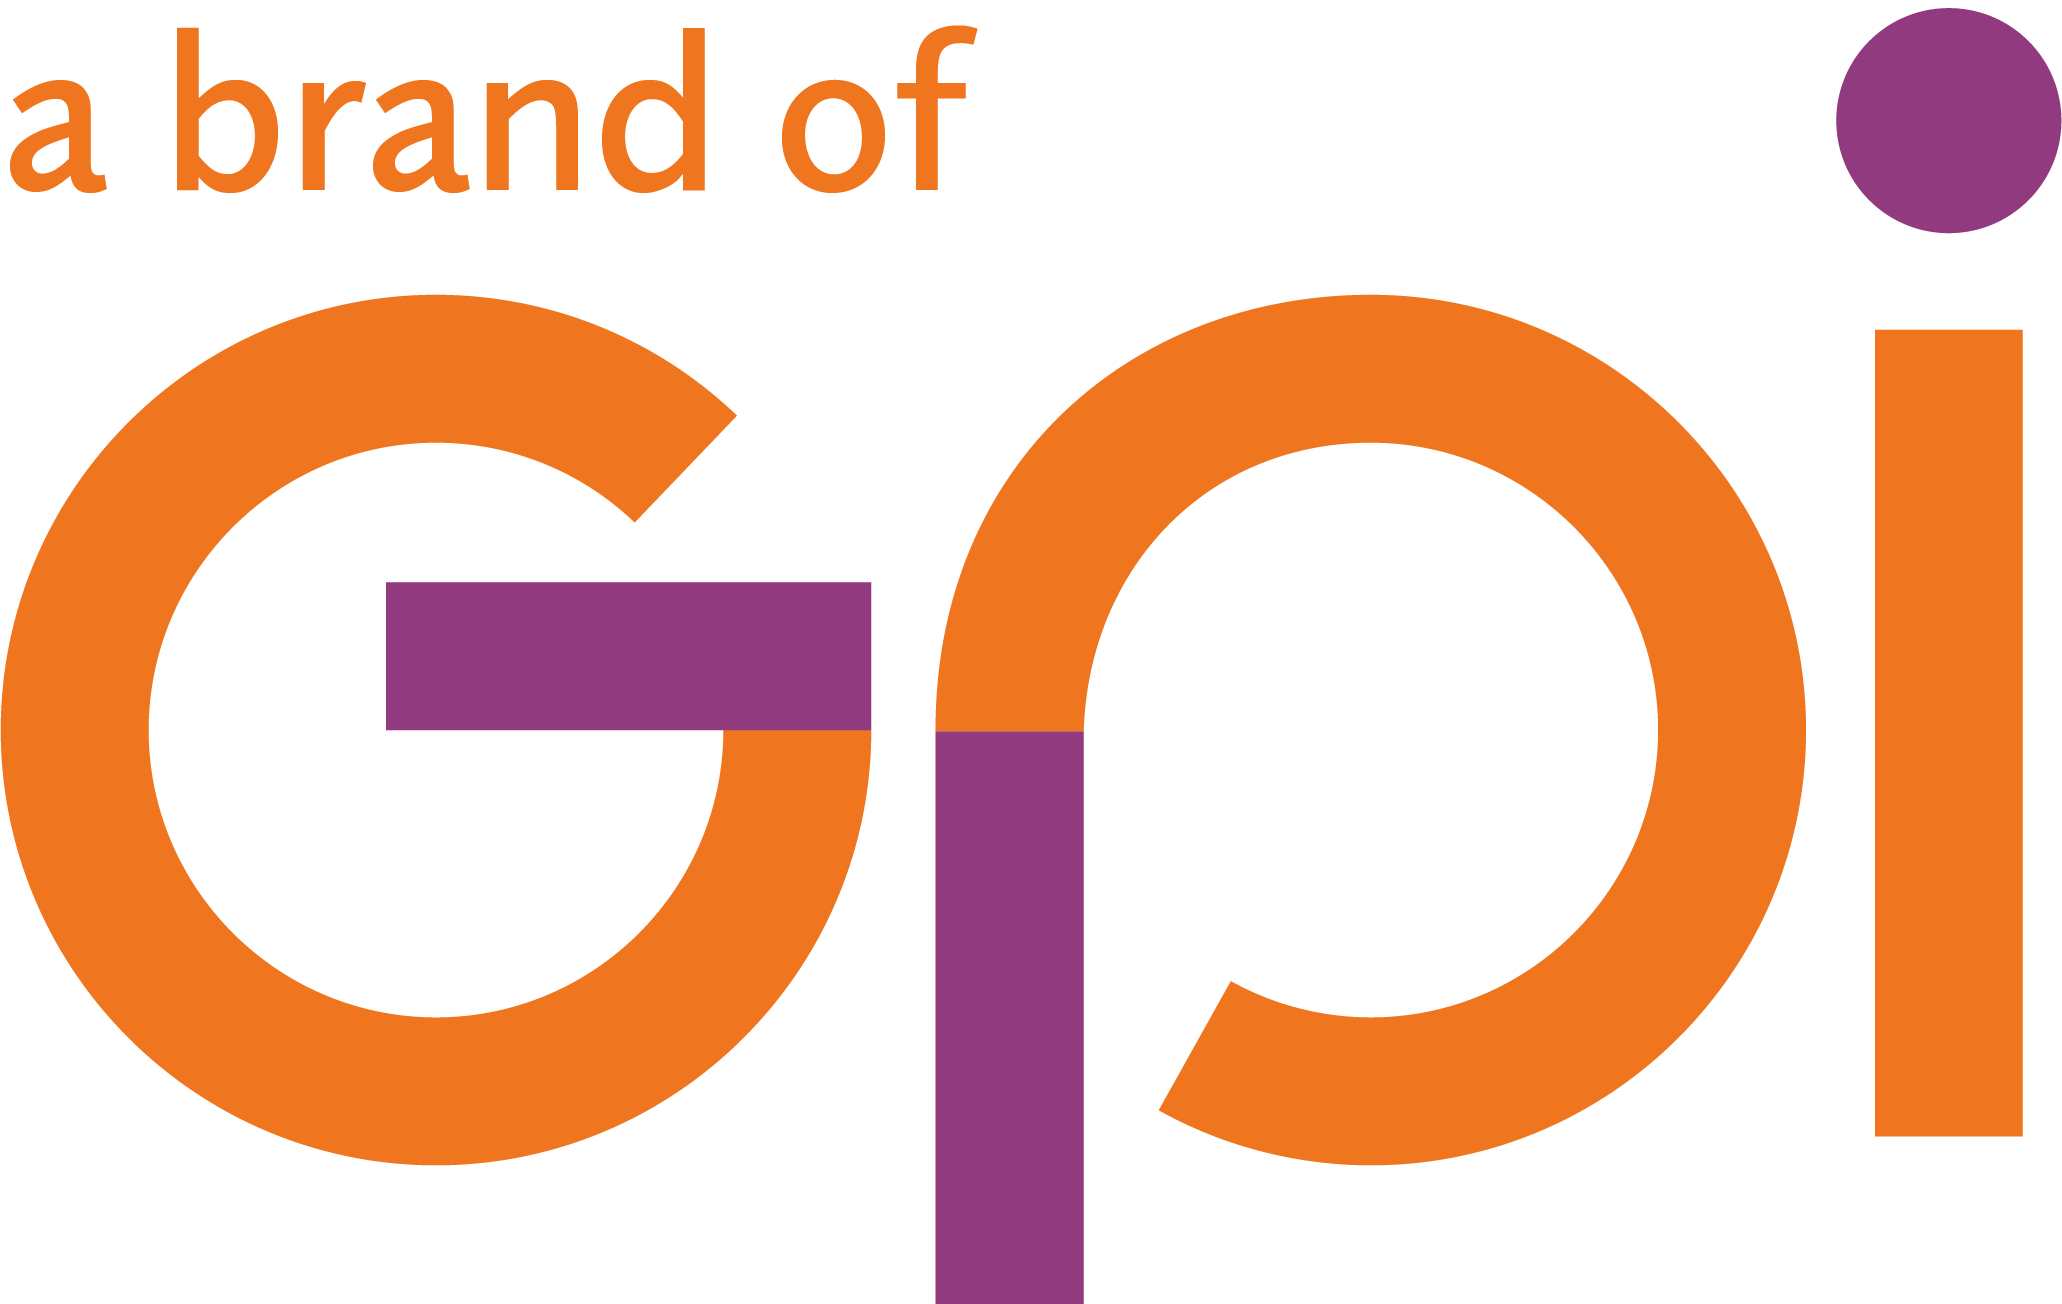 logo gpi group